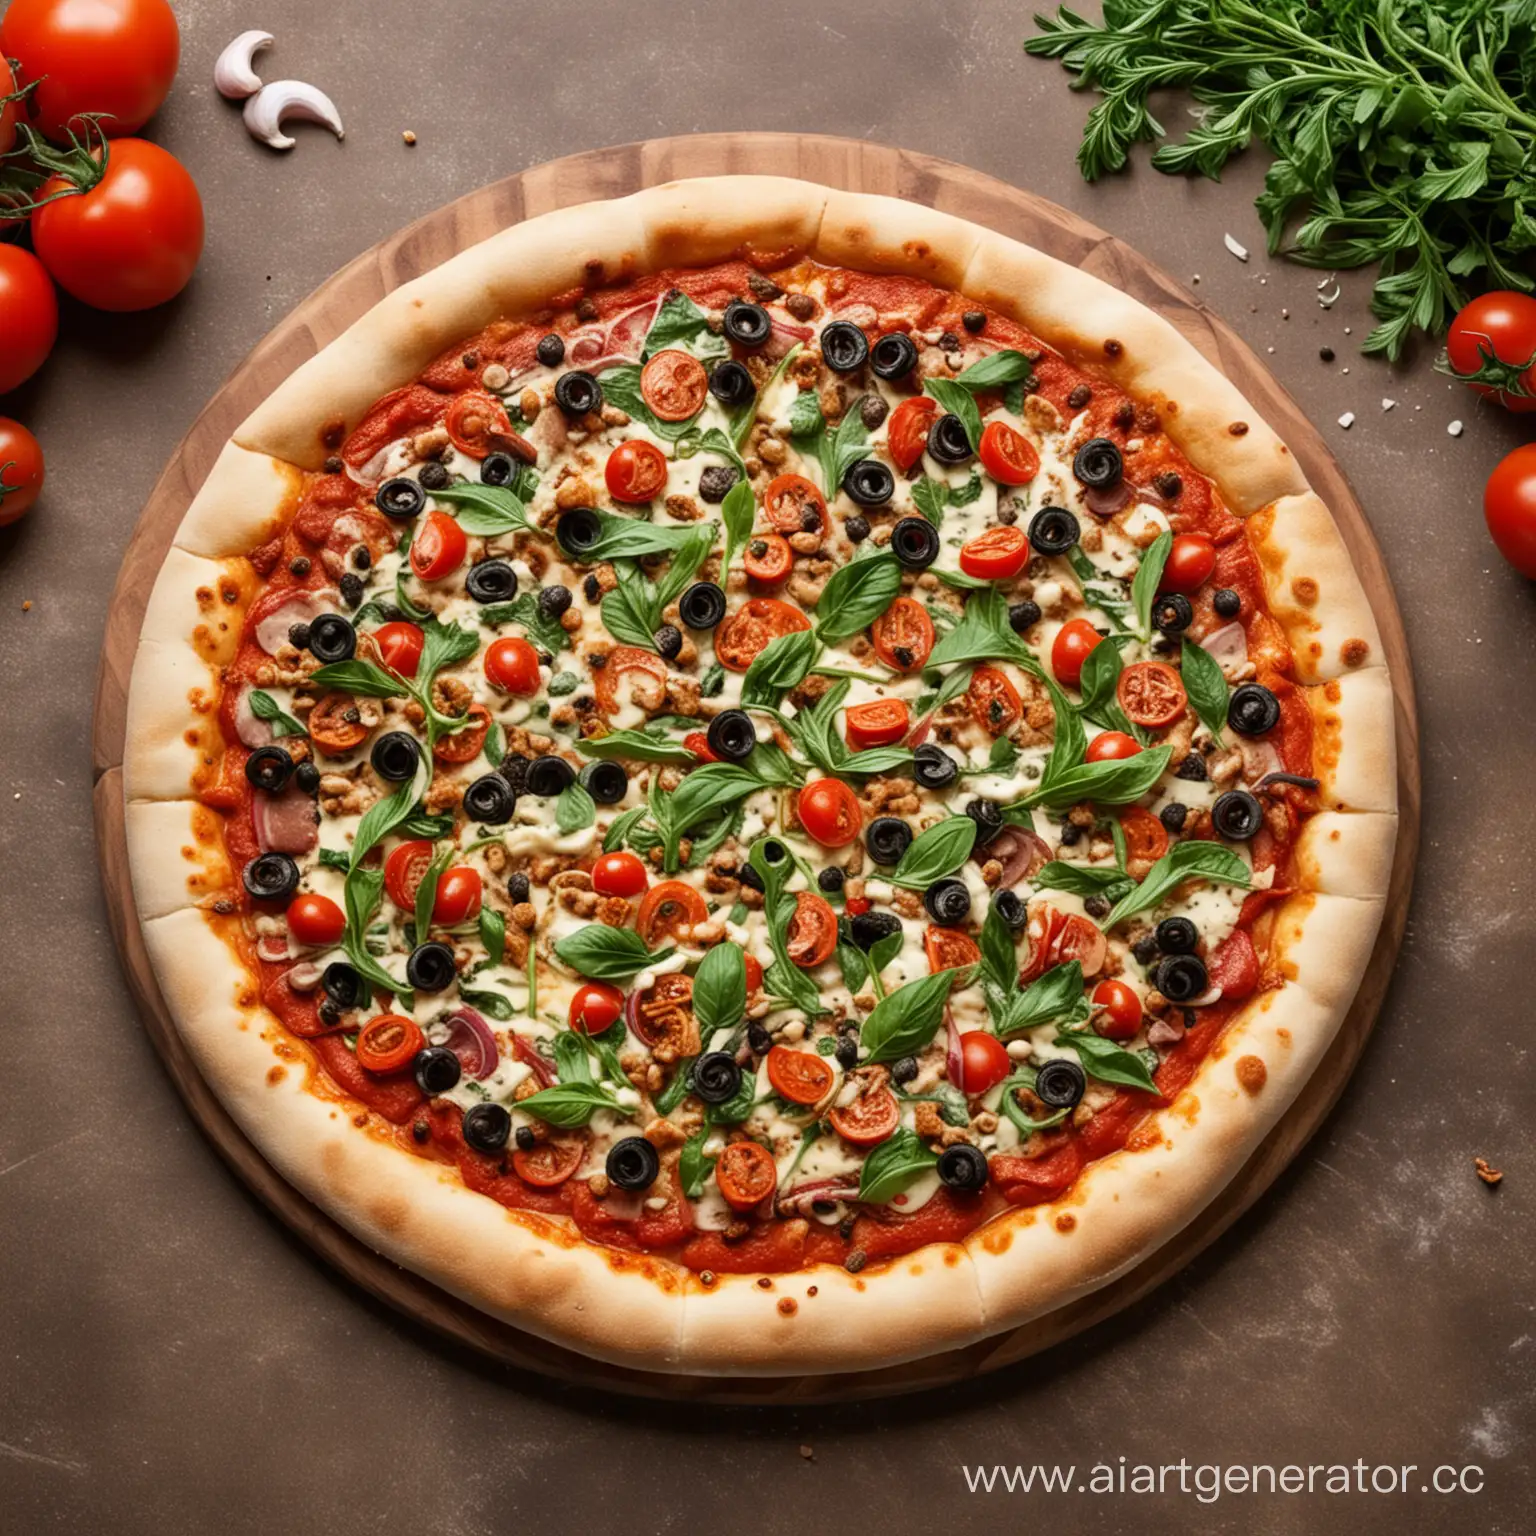 Artistic-Vegan-Pizza-by-Dodo-Pizza-Innovative-Design-Delights-Vegan-Enthusiasts